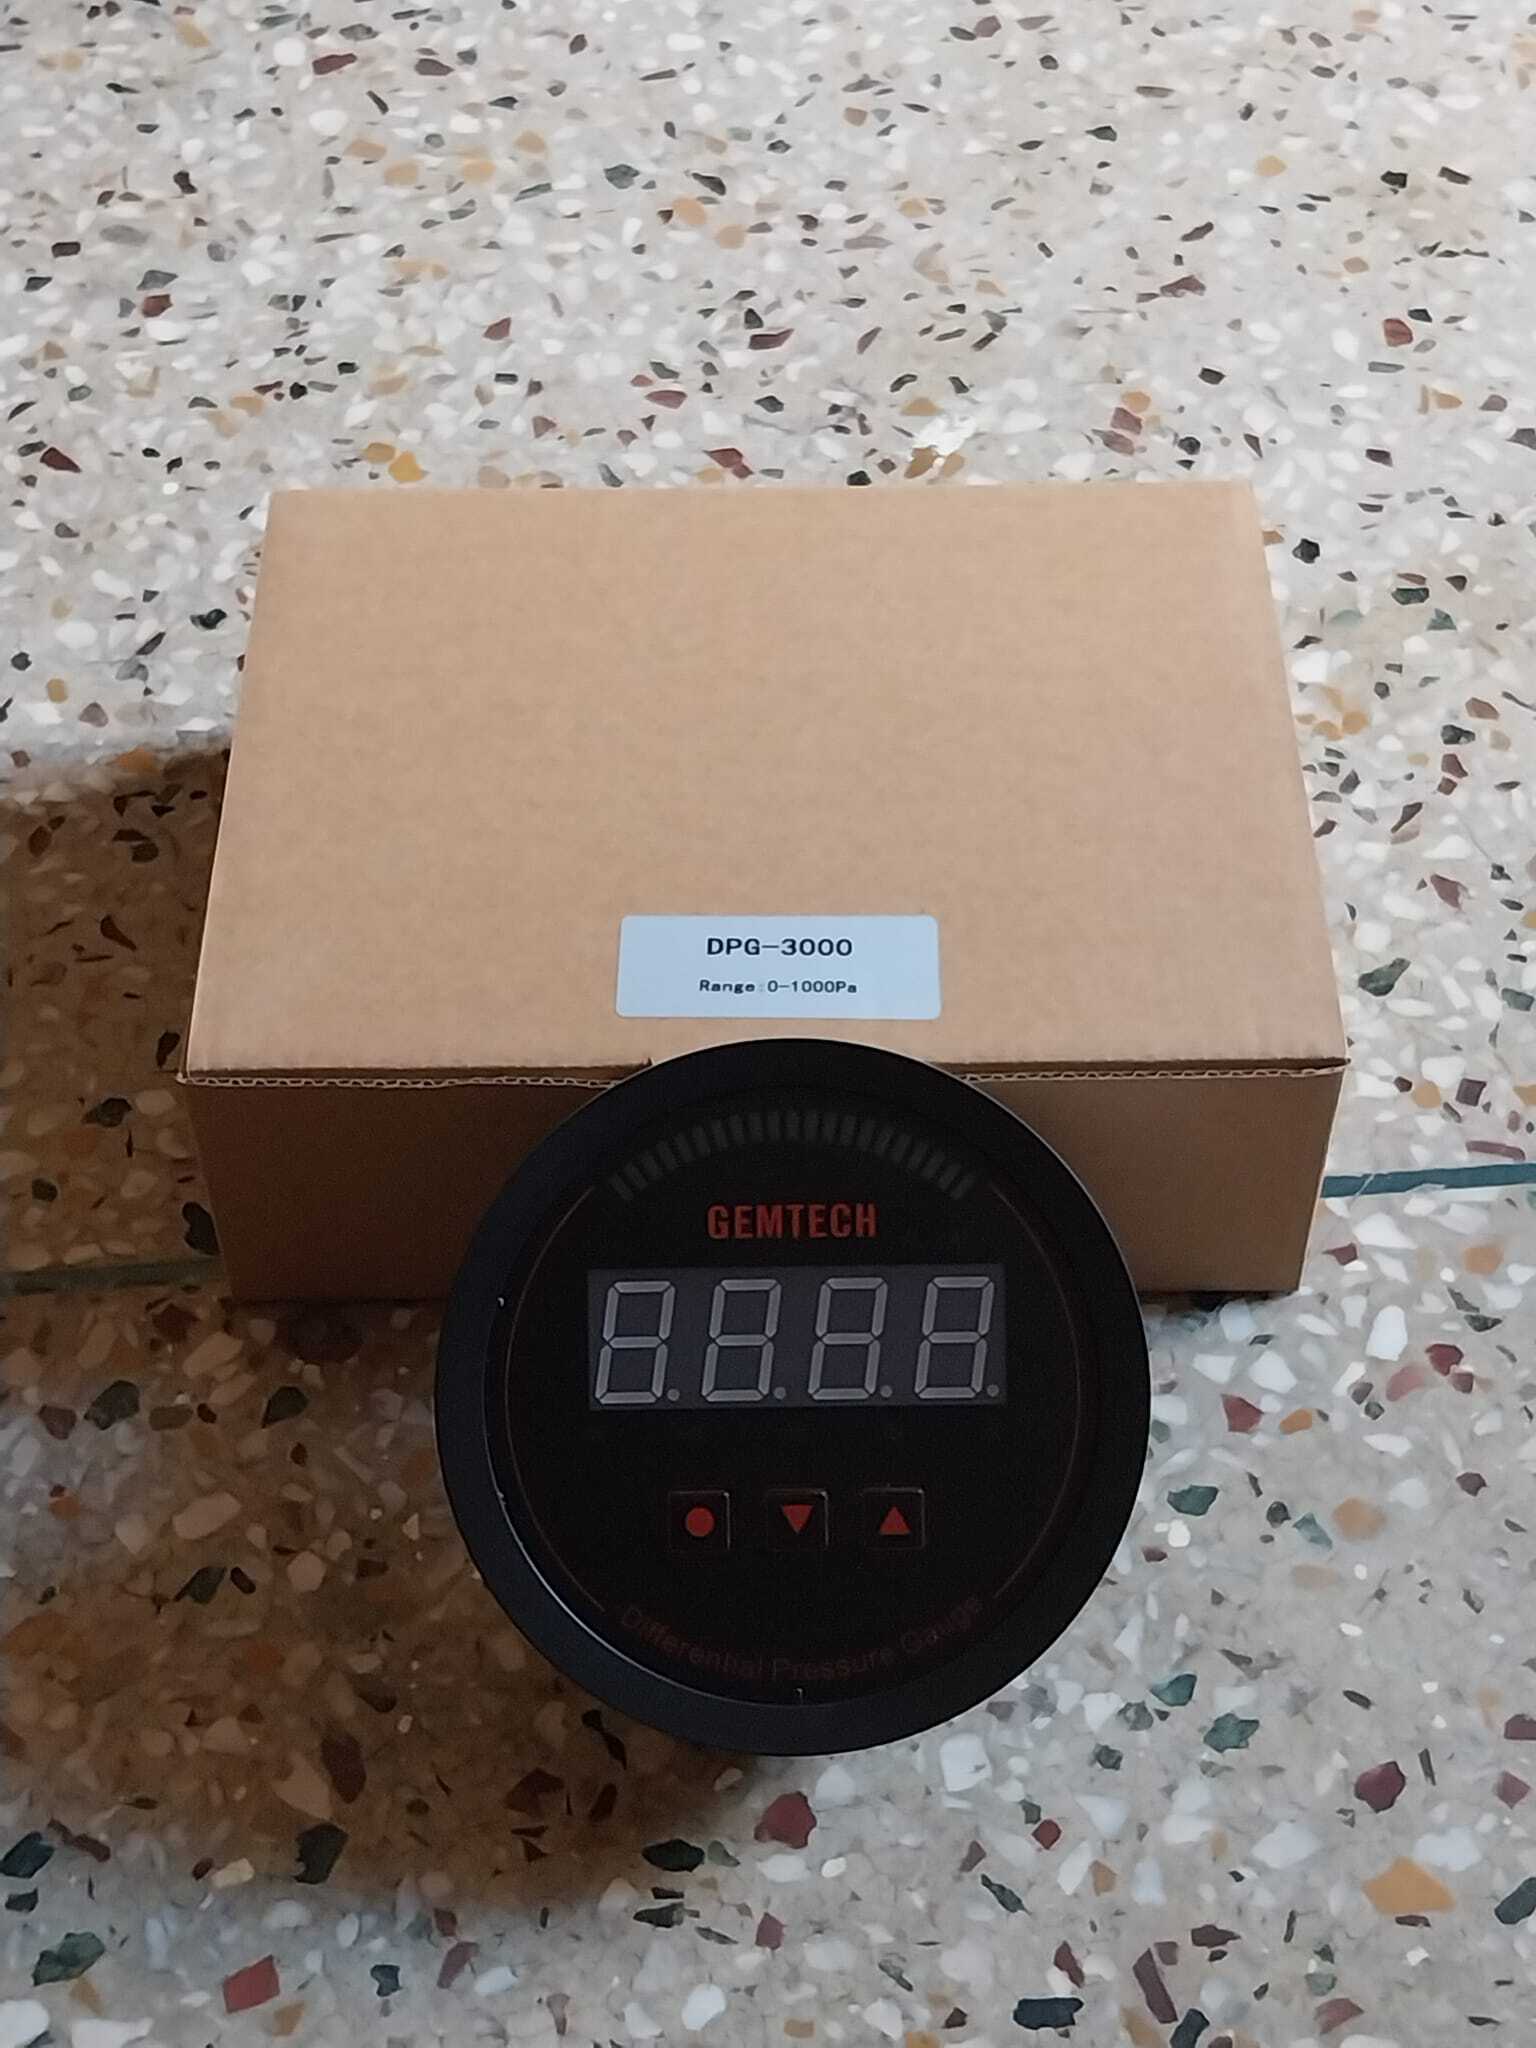 GEMTECH Series 3000 Digital Pressure Gauge With Alarm Range 0 to 8.000 INCH W.C